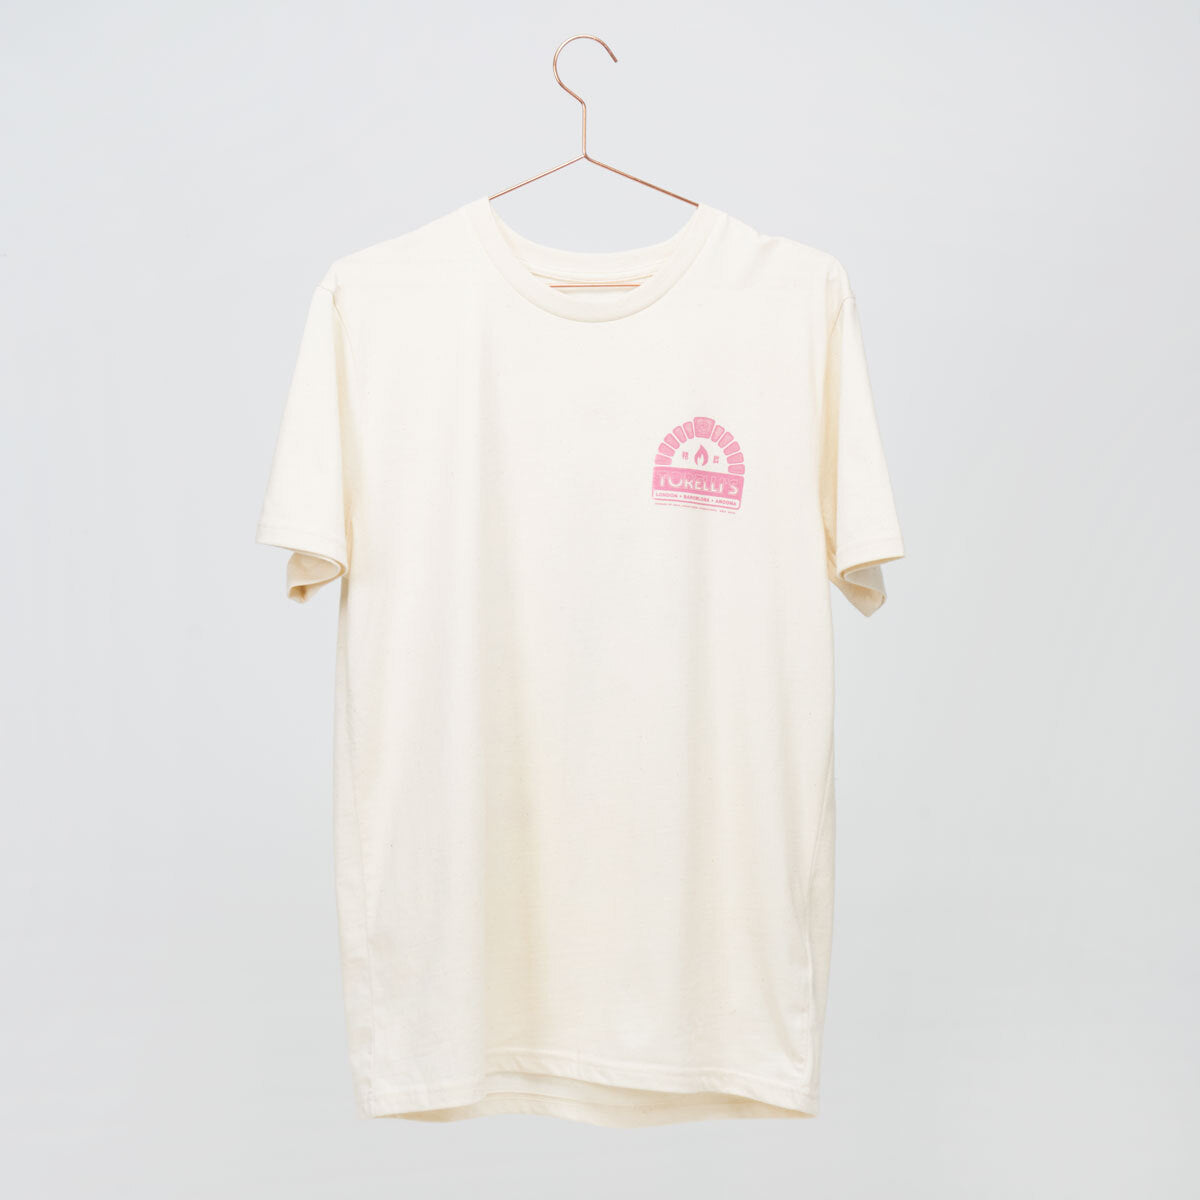 Loco Labs x Nico Torelli T-Shirt